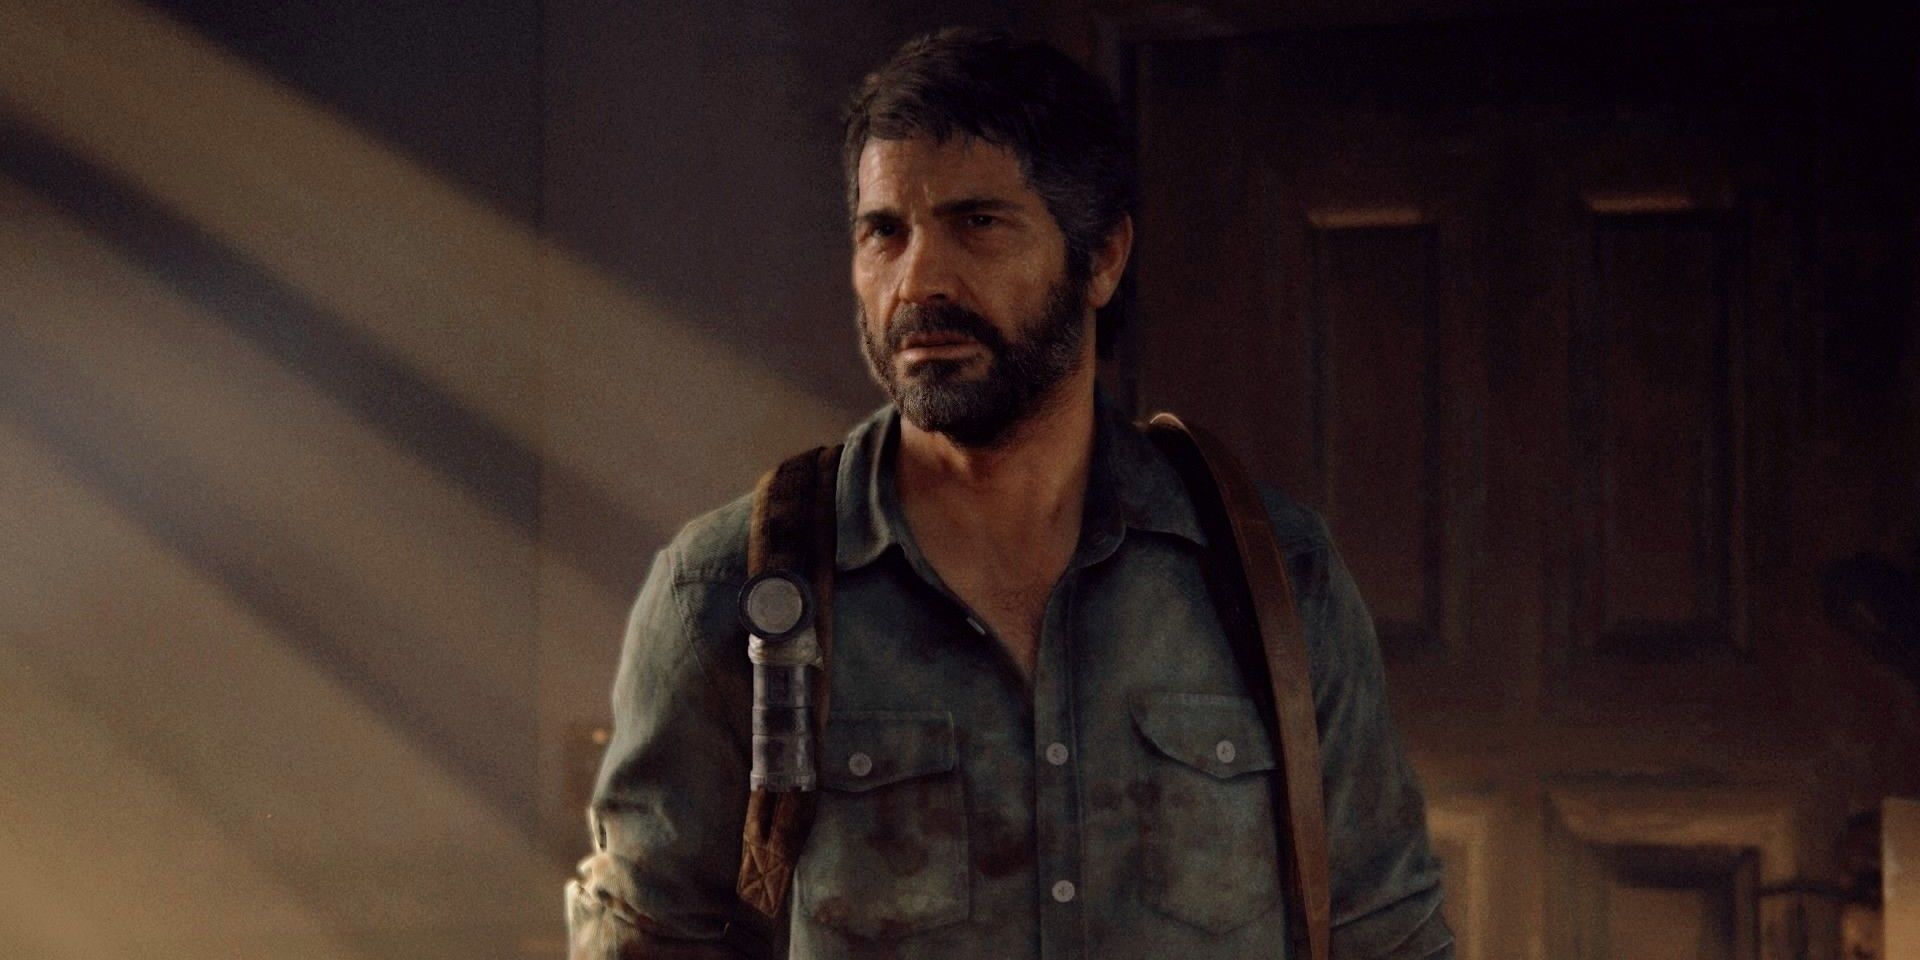 Joel Miller wearing a backpack in The Last of Us 